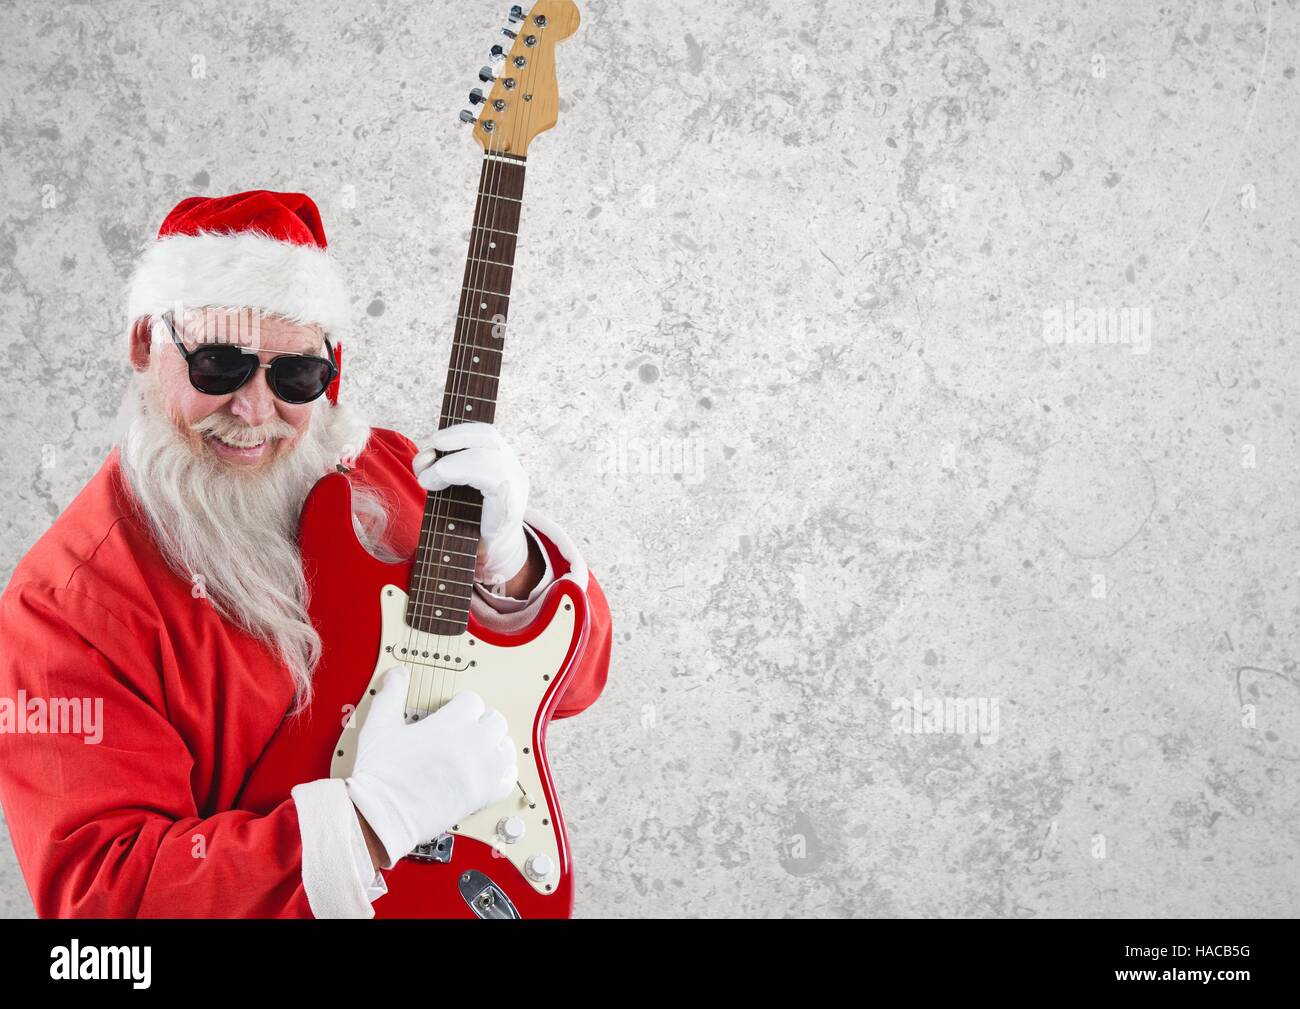 Santa claus wearing sunglasses playing guitar Stock Photo